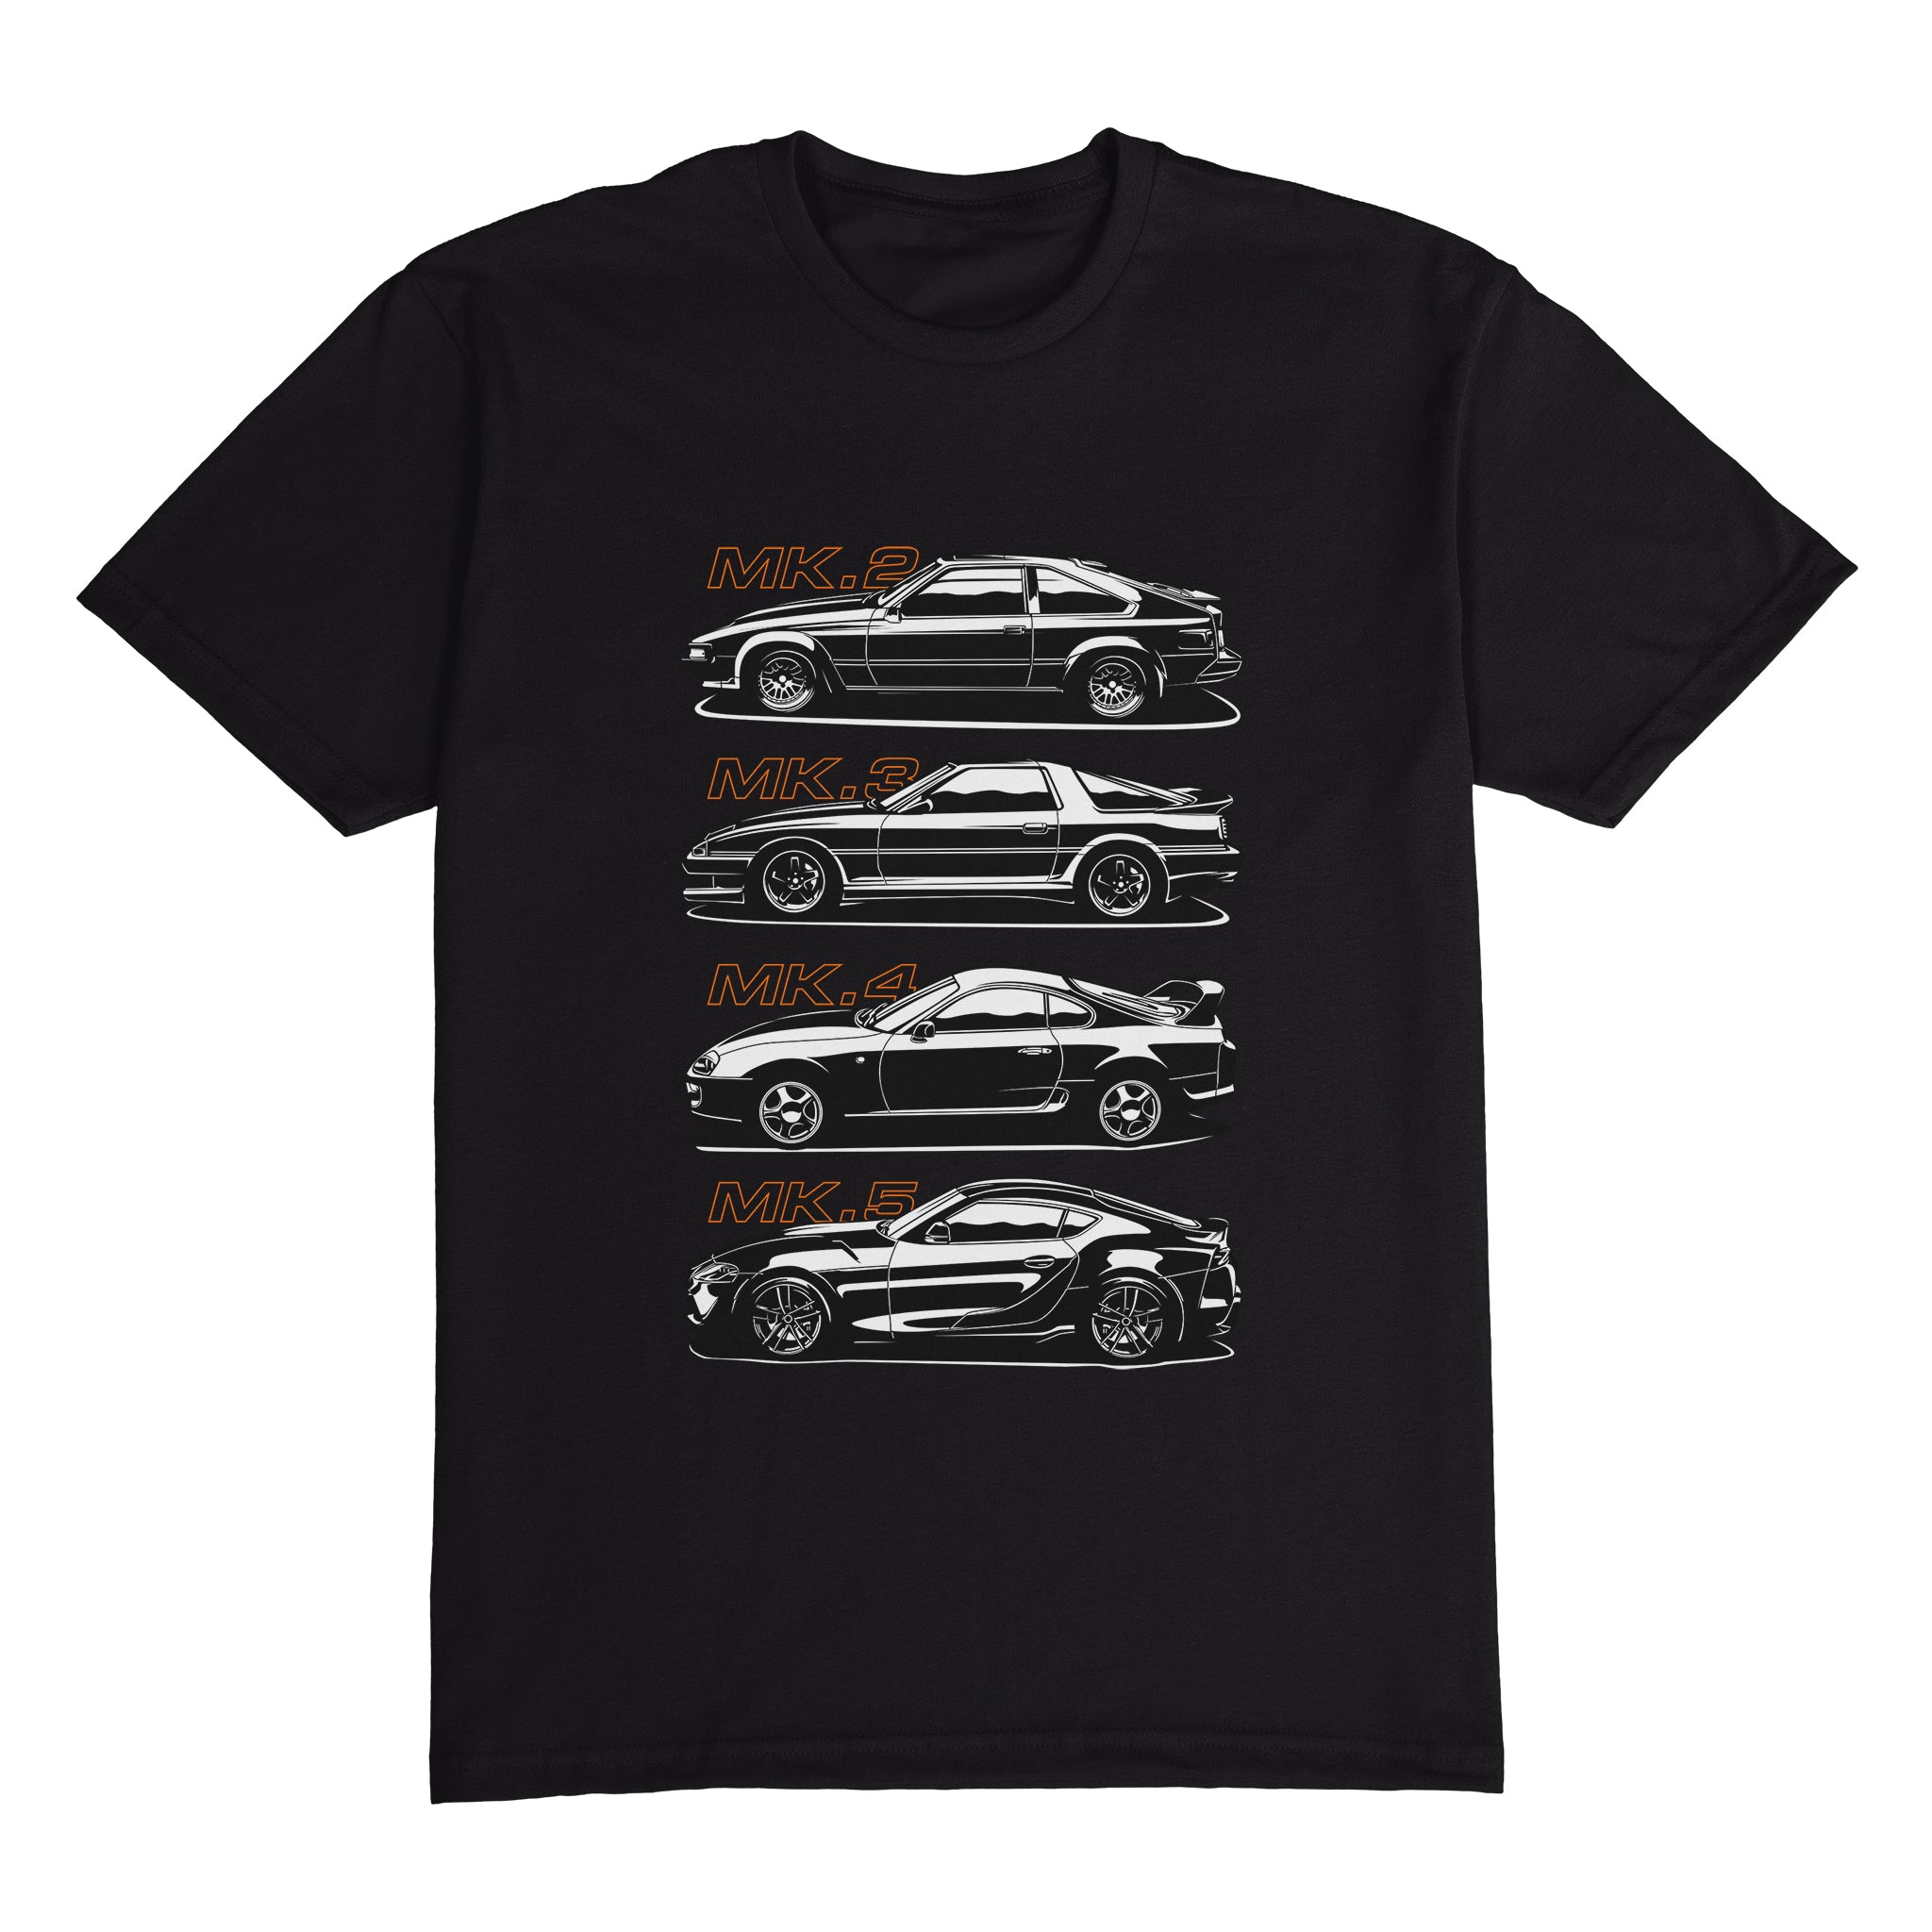 Toyota Supra History MK2, MK3, MK4, MK5 Car t-shirt in Black.